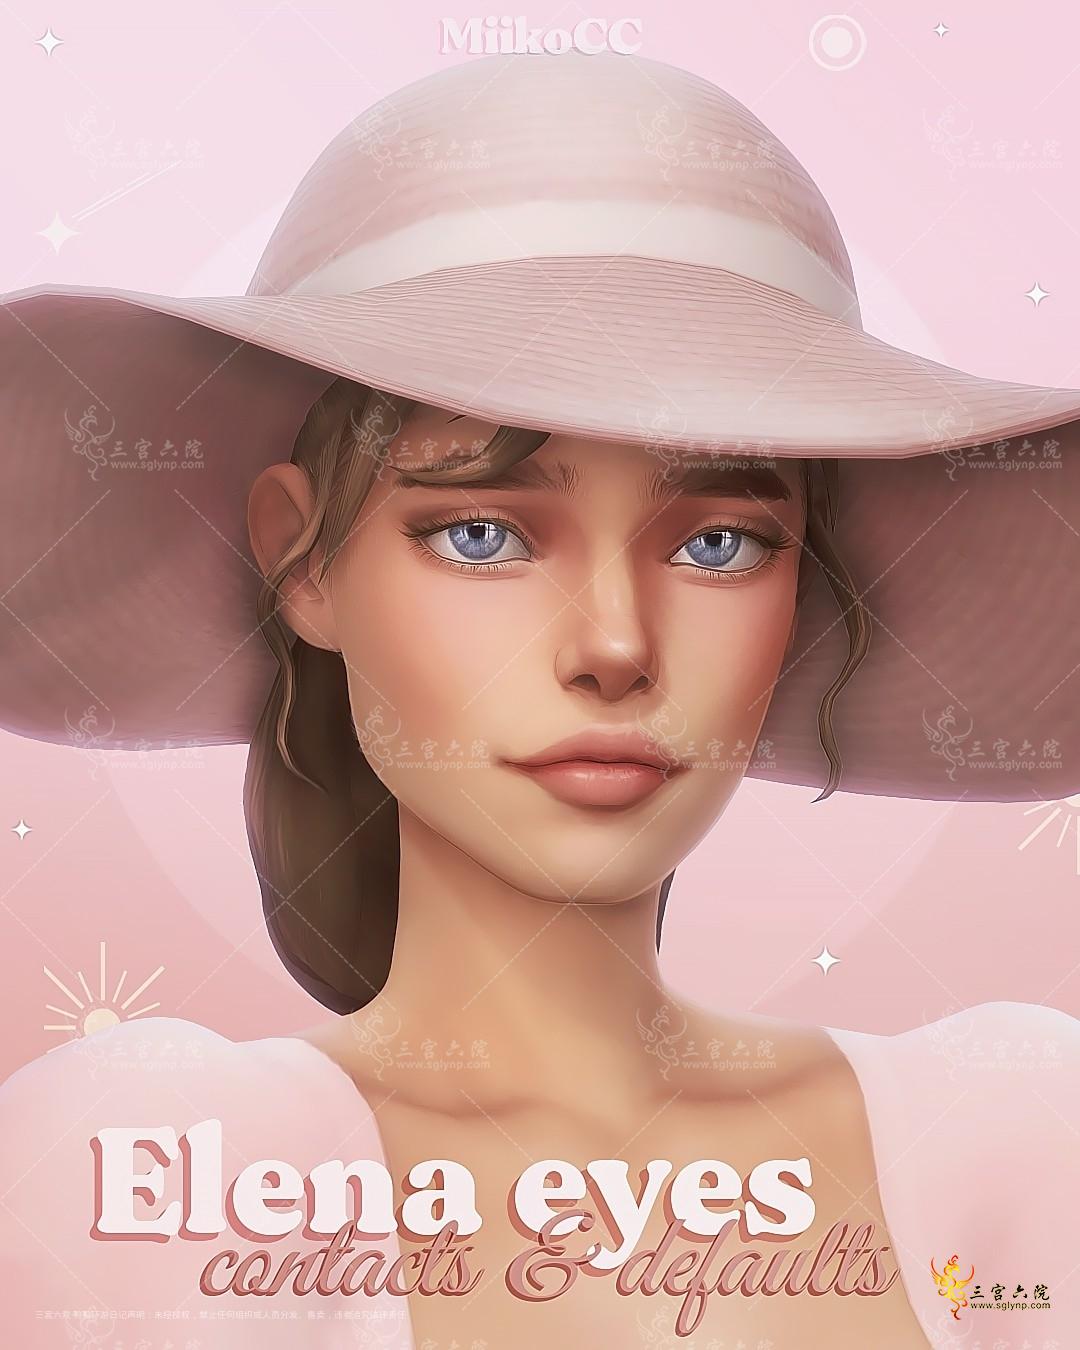 elena-eyes-01 - Copy.jpg